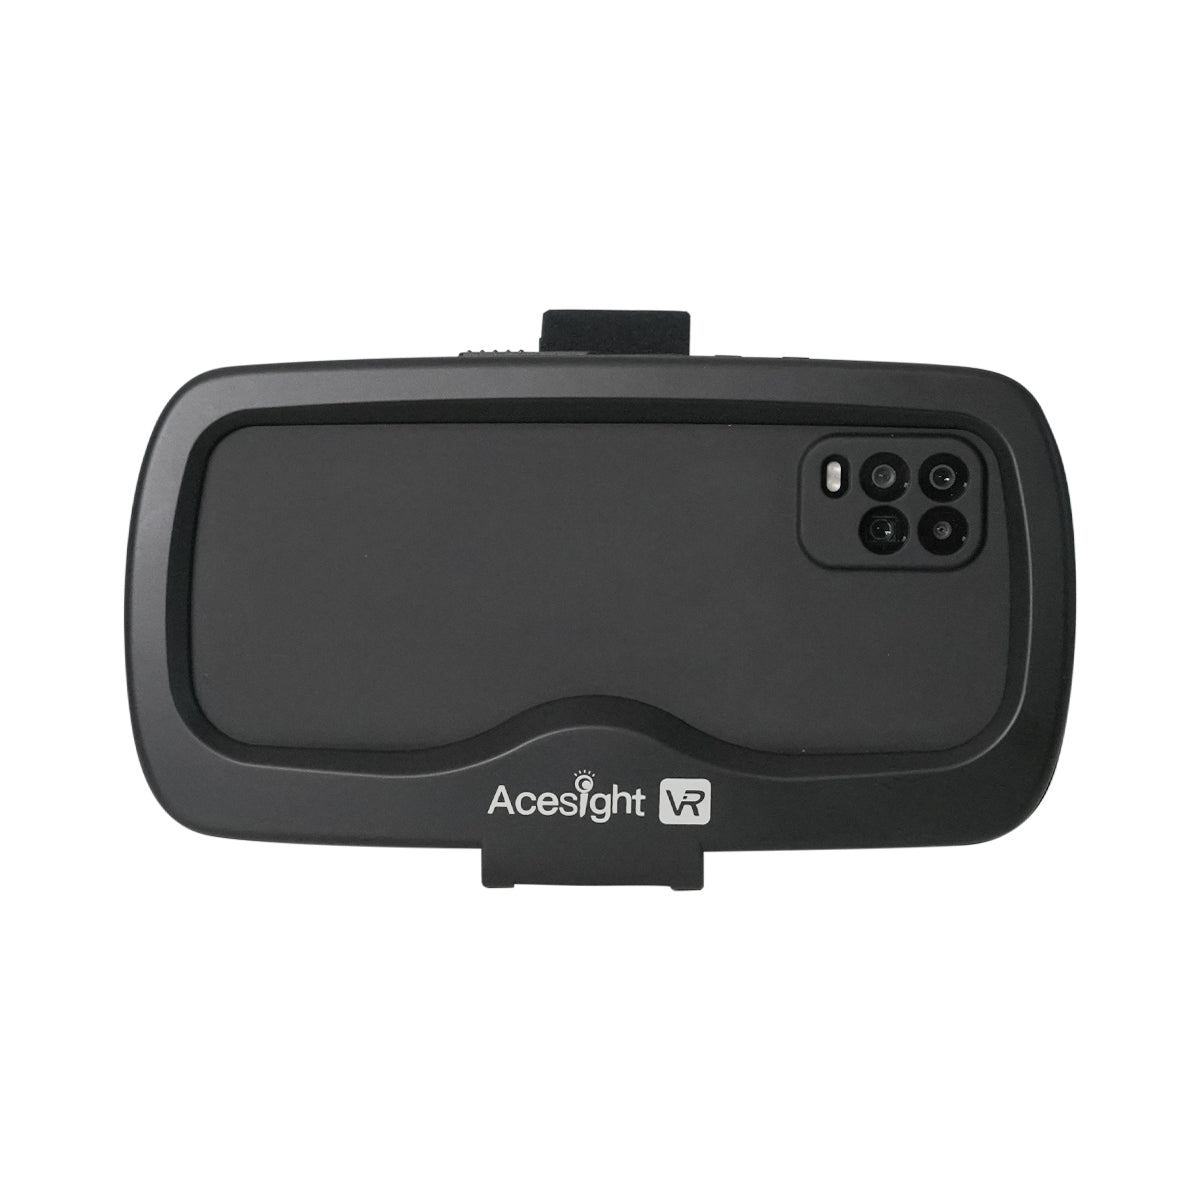 Acesight VR – Electronic eyeware front